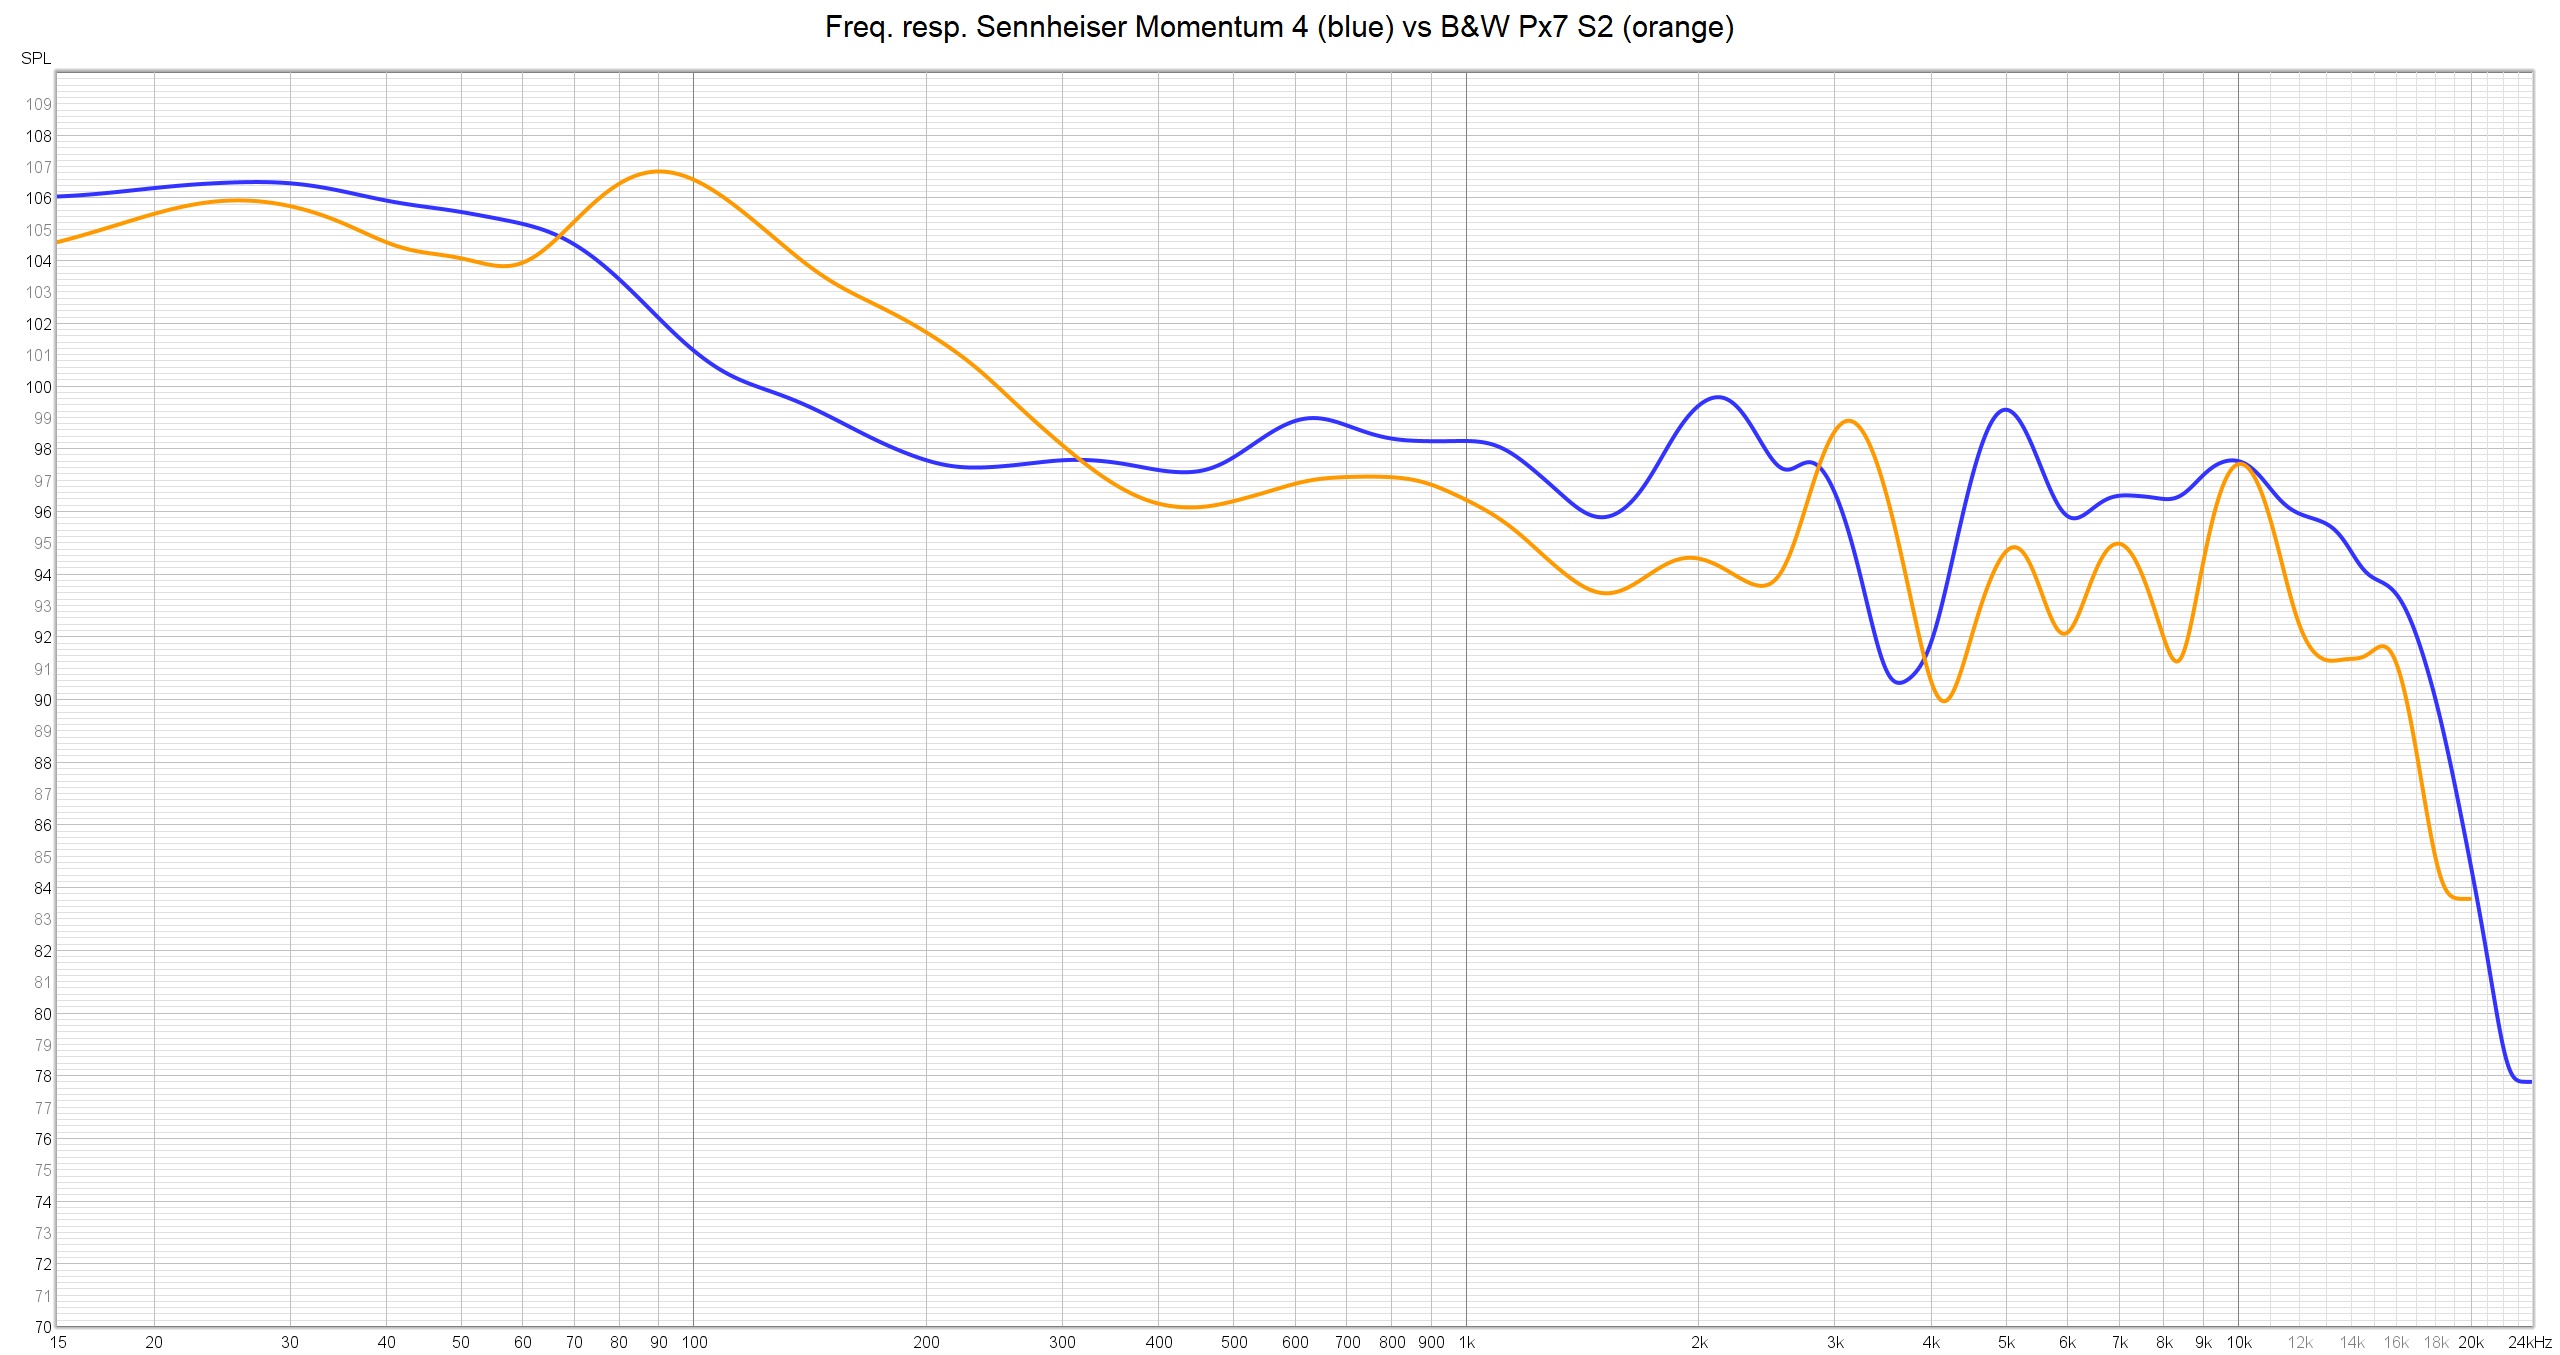 Sennheiser Momentum 4 vs BW Px7 S2 freq resp